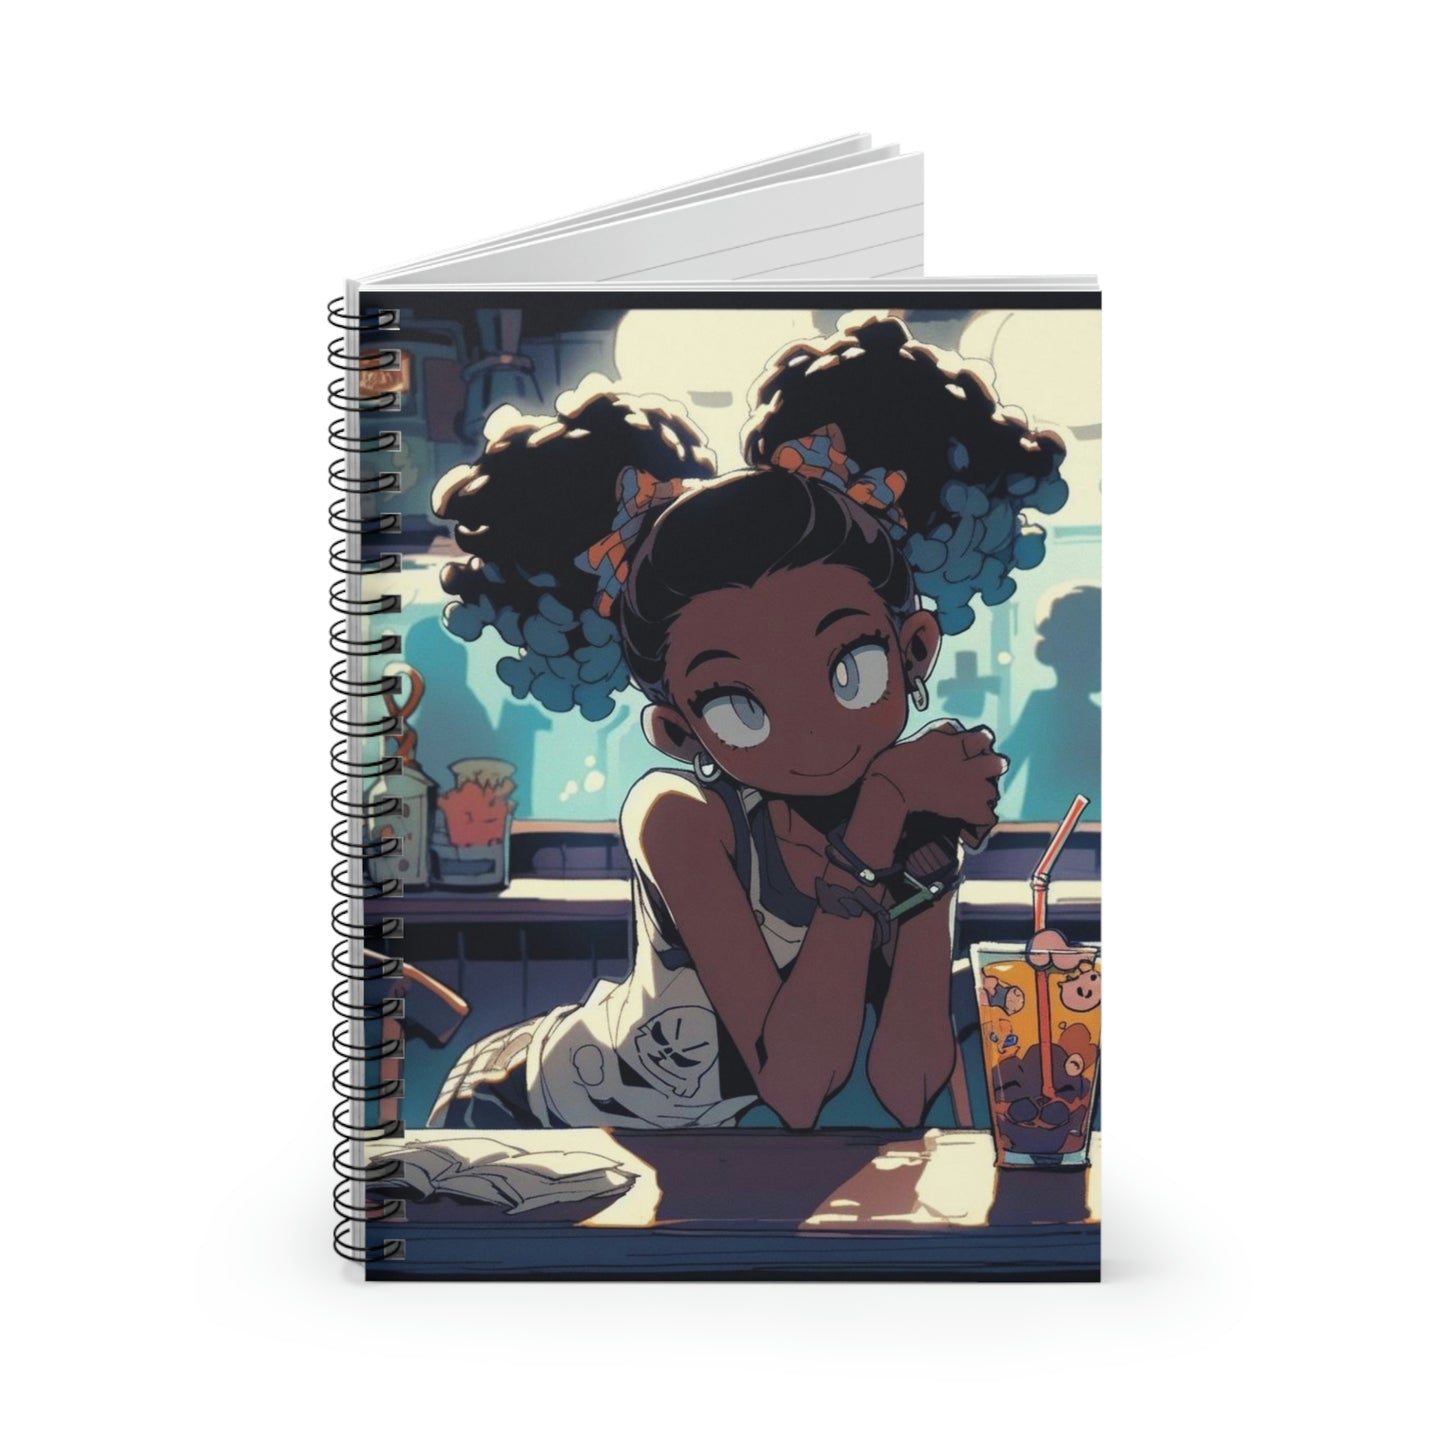 Cute Anime 2 Spiral Notebook - Ruled Line